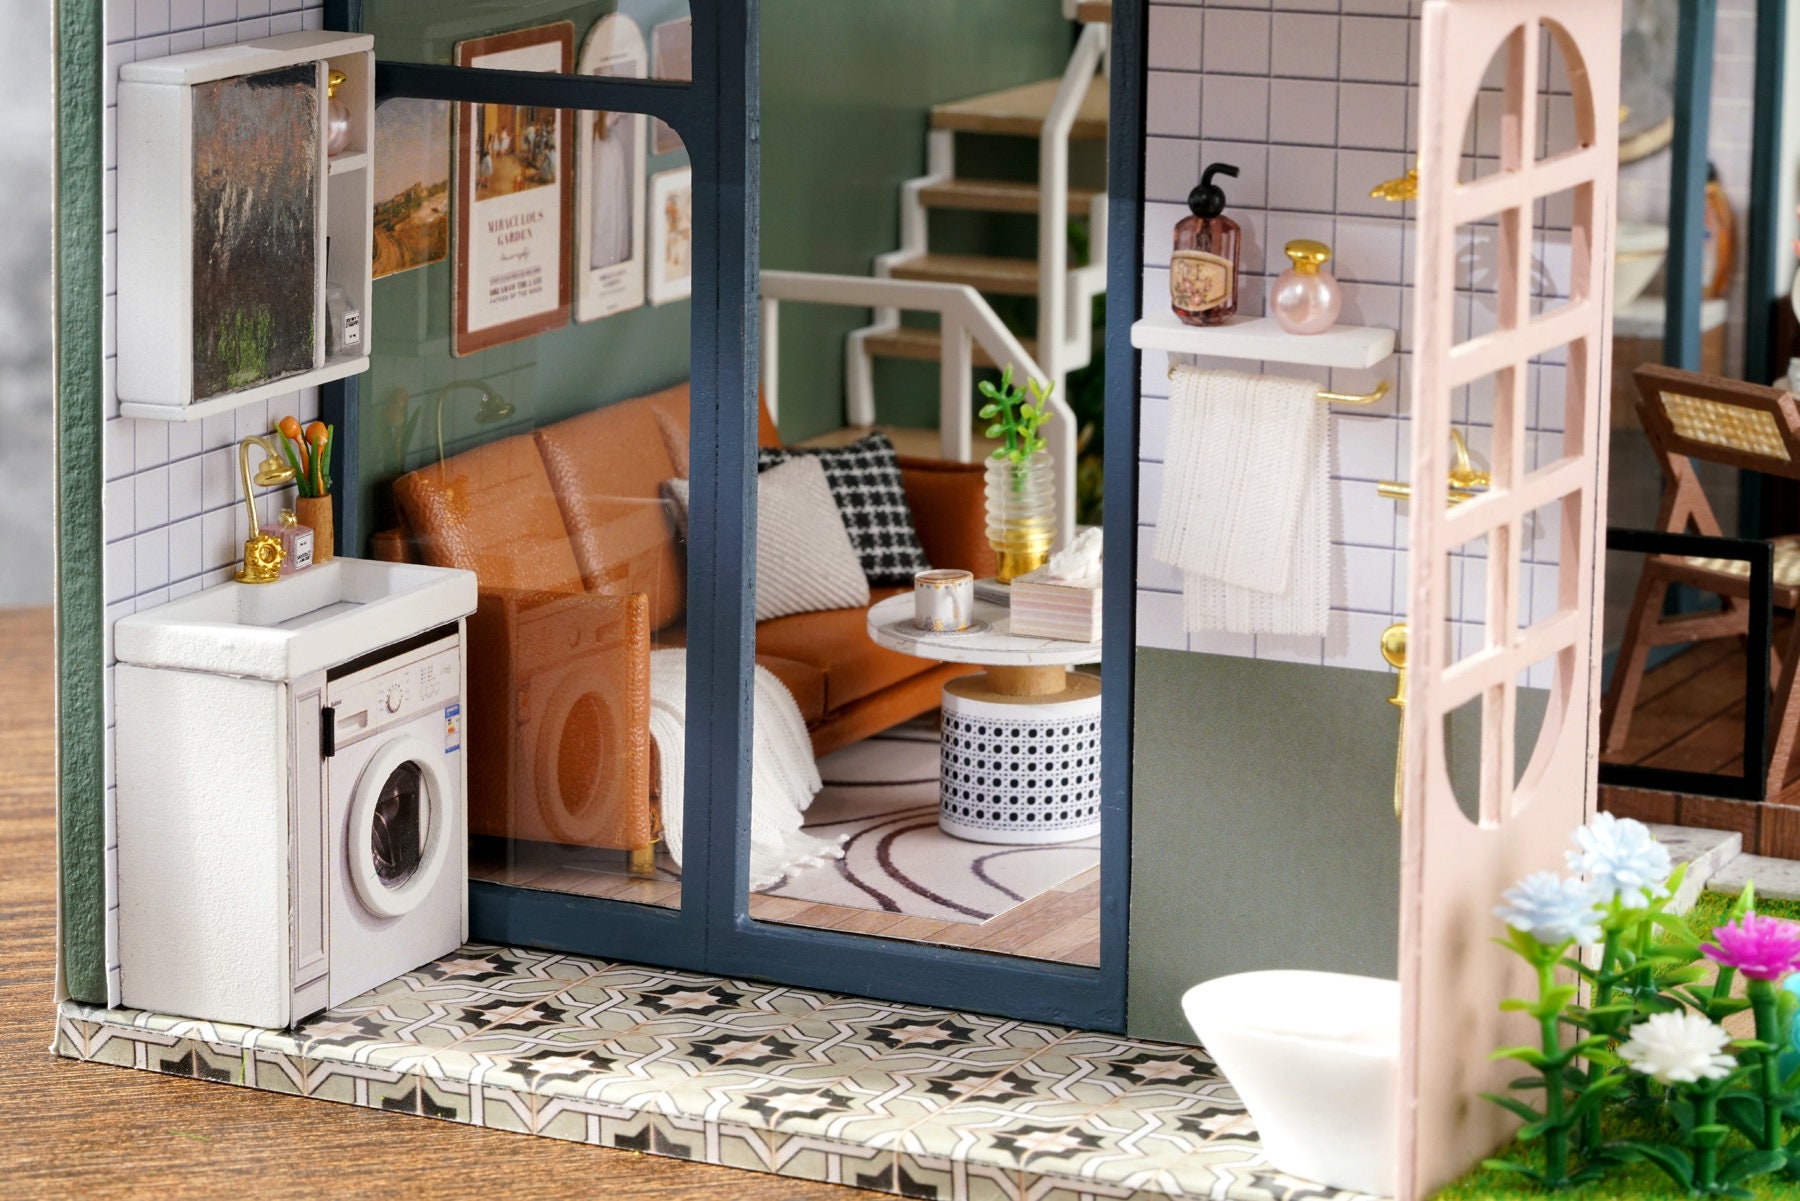 DIY Kits Miniature Rooms Elf Secret Door Loft Kitchen Garden Café Gift  Choose